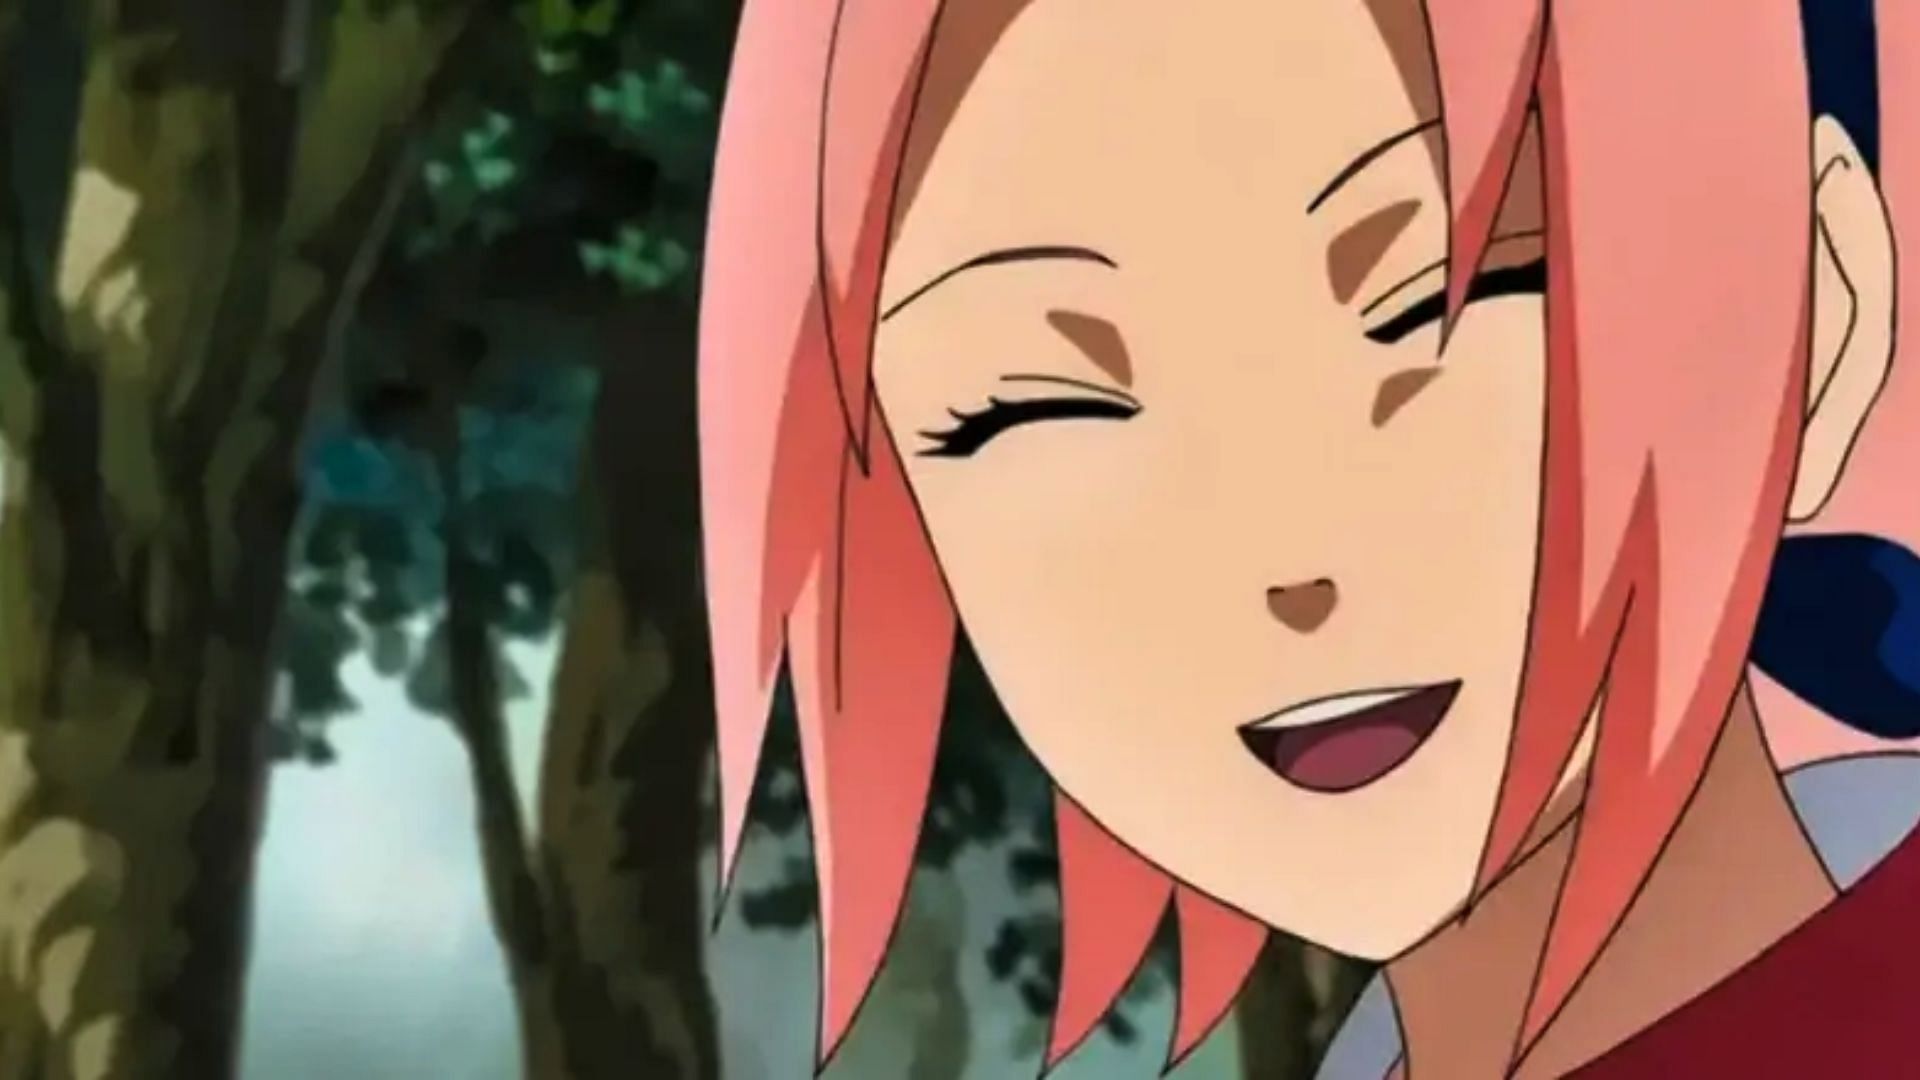 Sakura Haruno as seen in Naruto (Image via Pierrot)